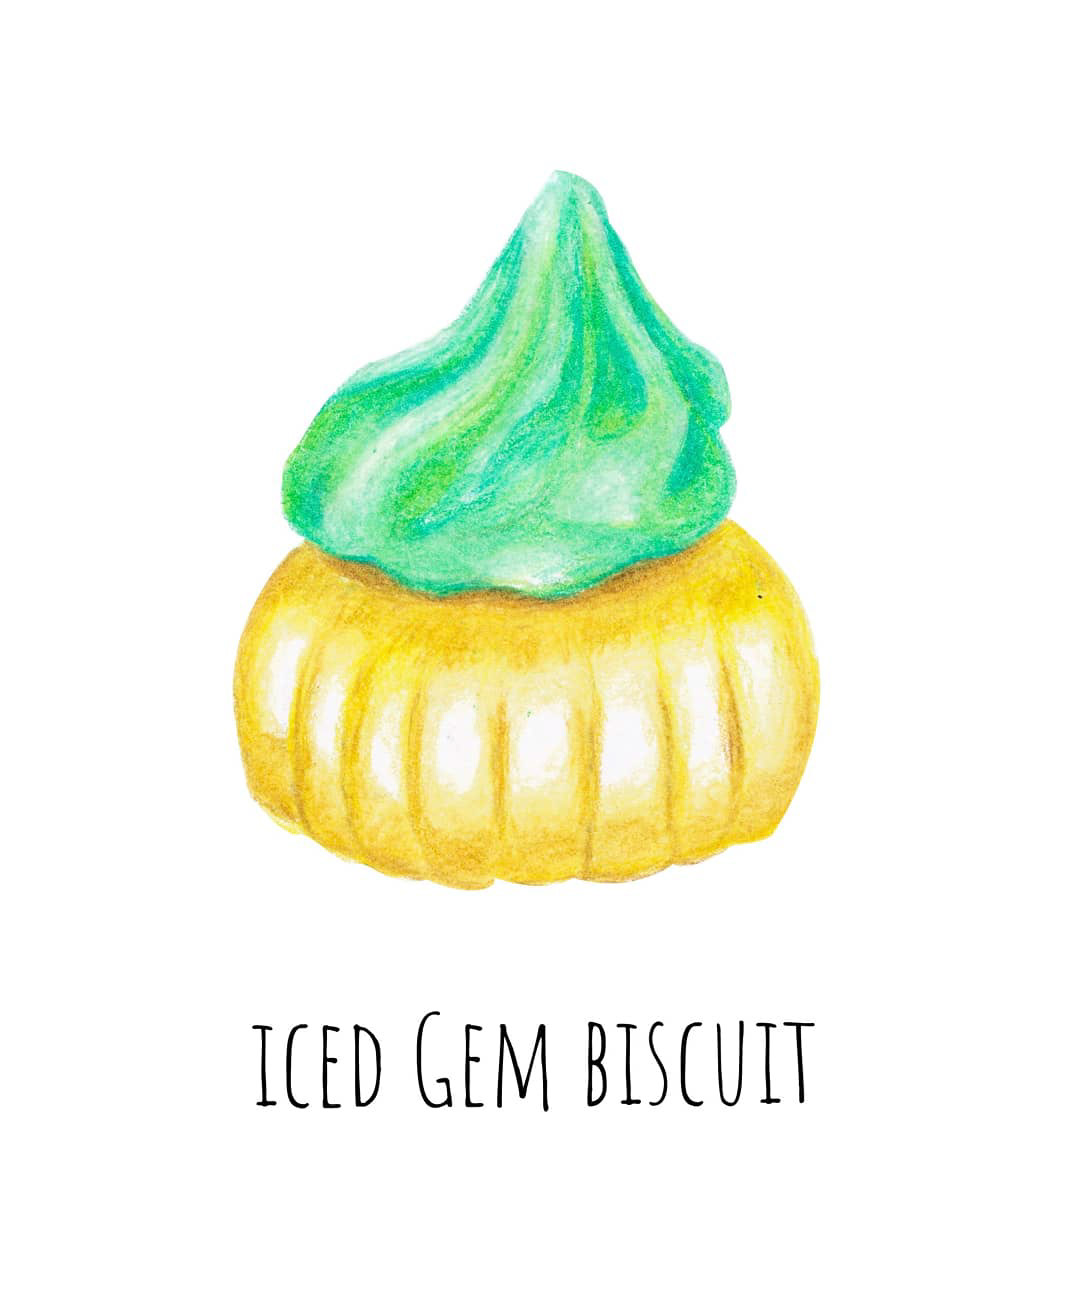 illustration of singapore childhood snack ice gem biscuit